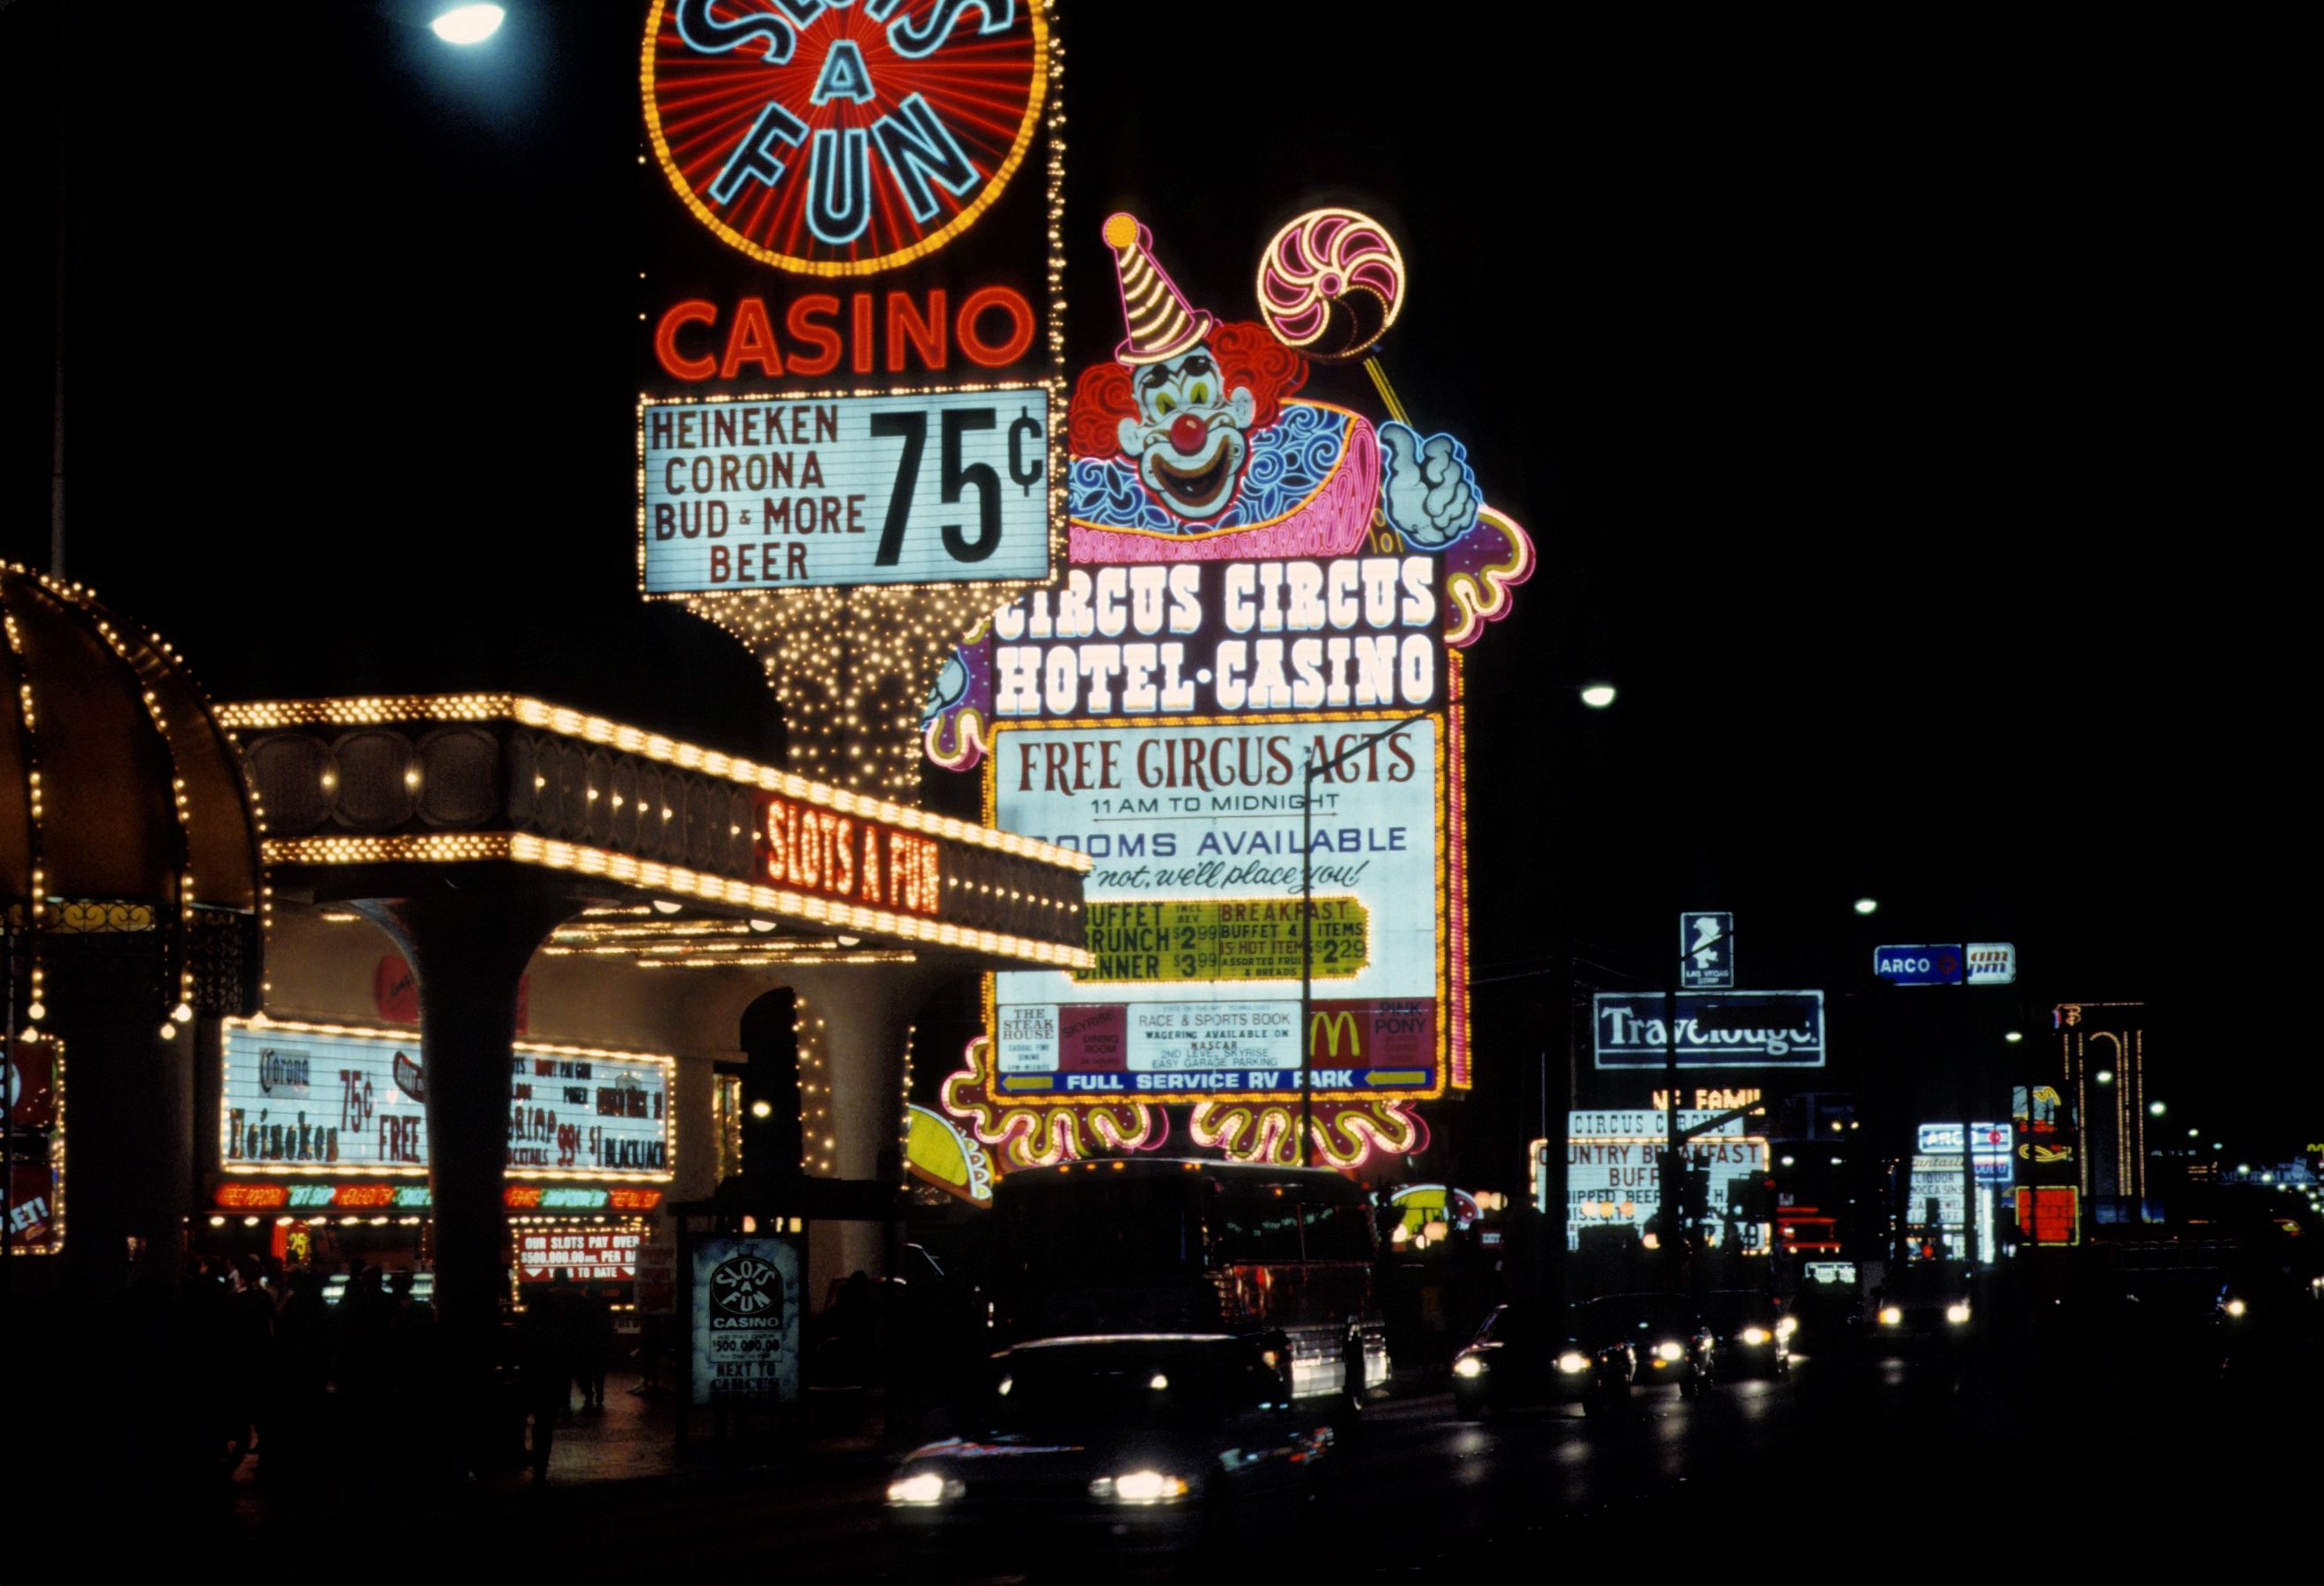 circus-circus-casino-circa-1981-in-las-vegas-news-photo-1012618894-1563989548.jpg